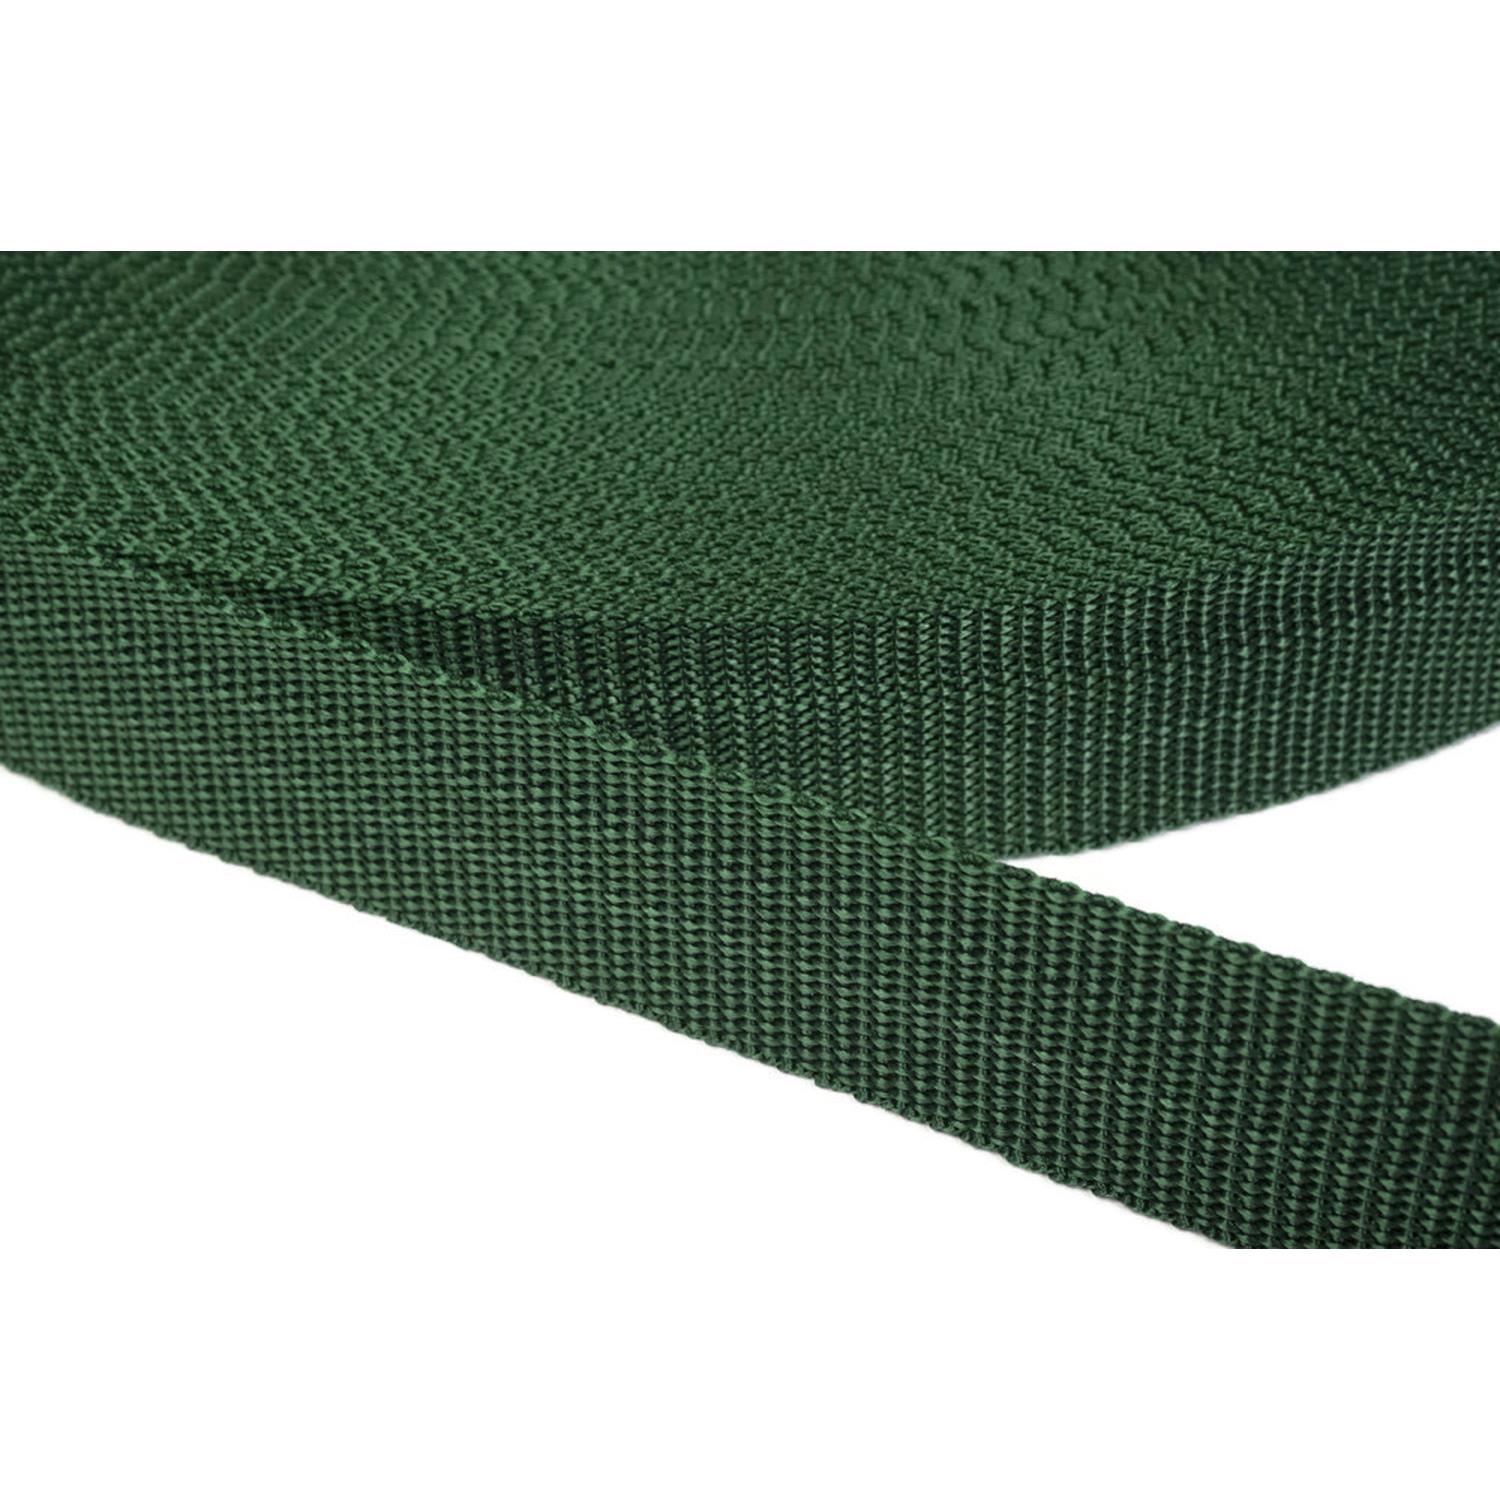 Gurtband 40mm breit aus Polypropylen in 41 Farben 35 - dunkelgrün 12 Meter